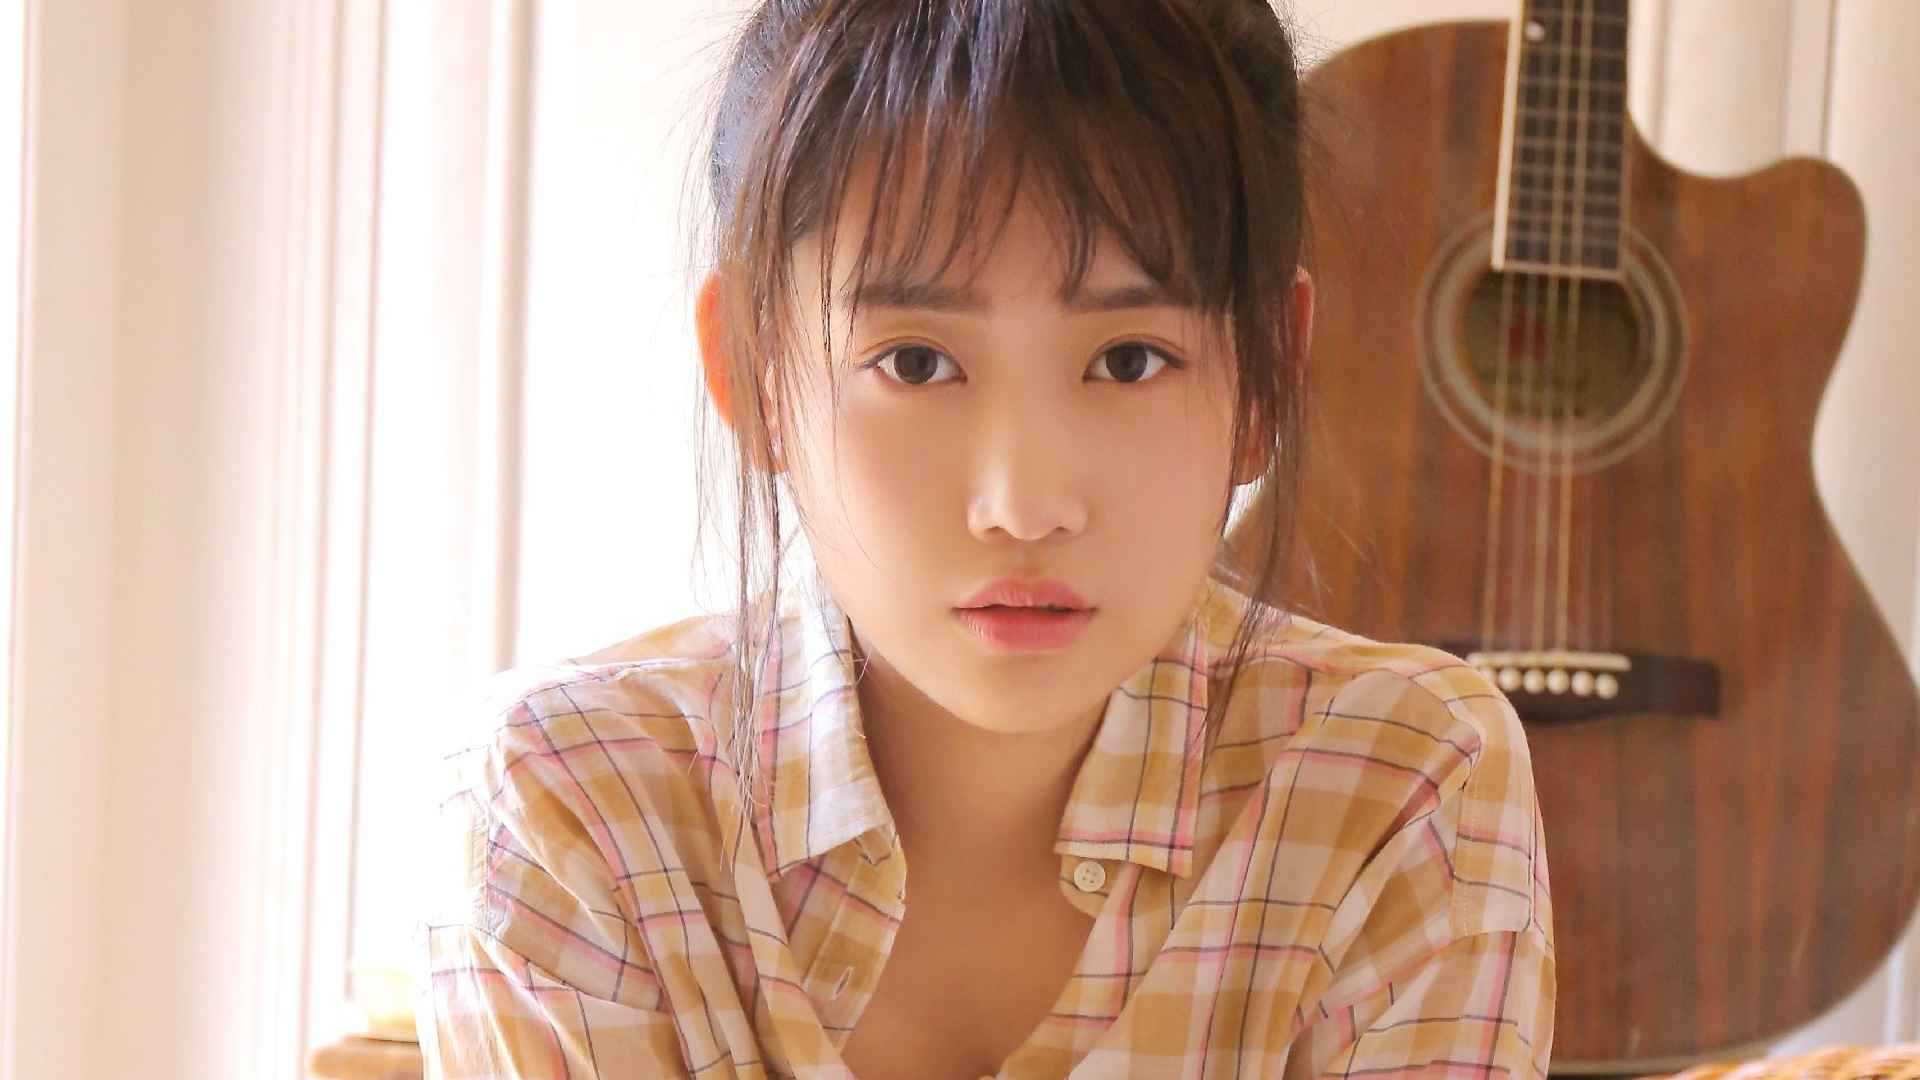 [Girlz-High] Hiyori Izumi 和泉ひより – 日本极品小萝莉 i3 写真集 高清大图在线浏览 - 新美图录